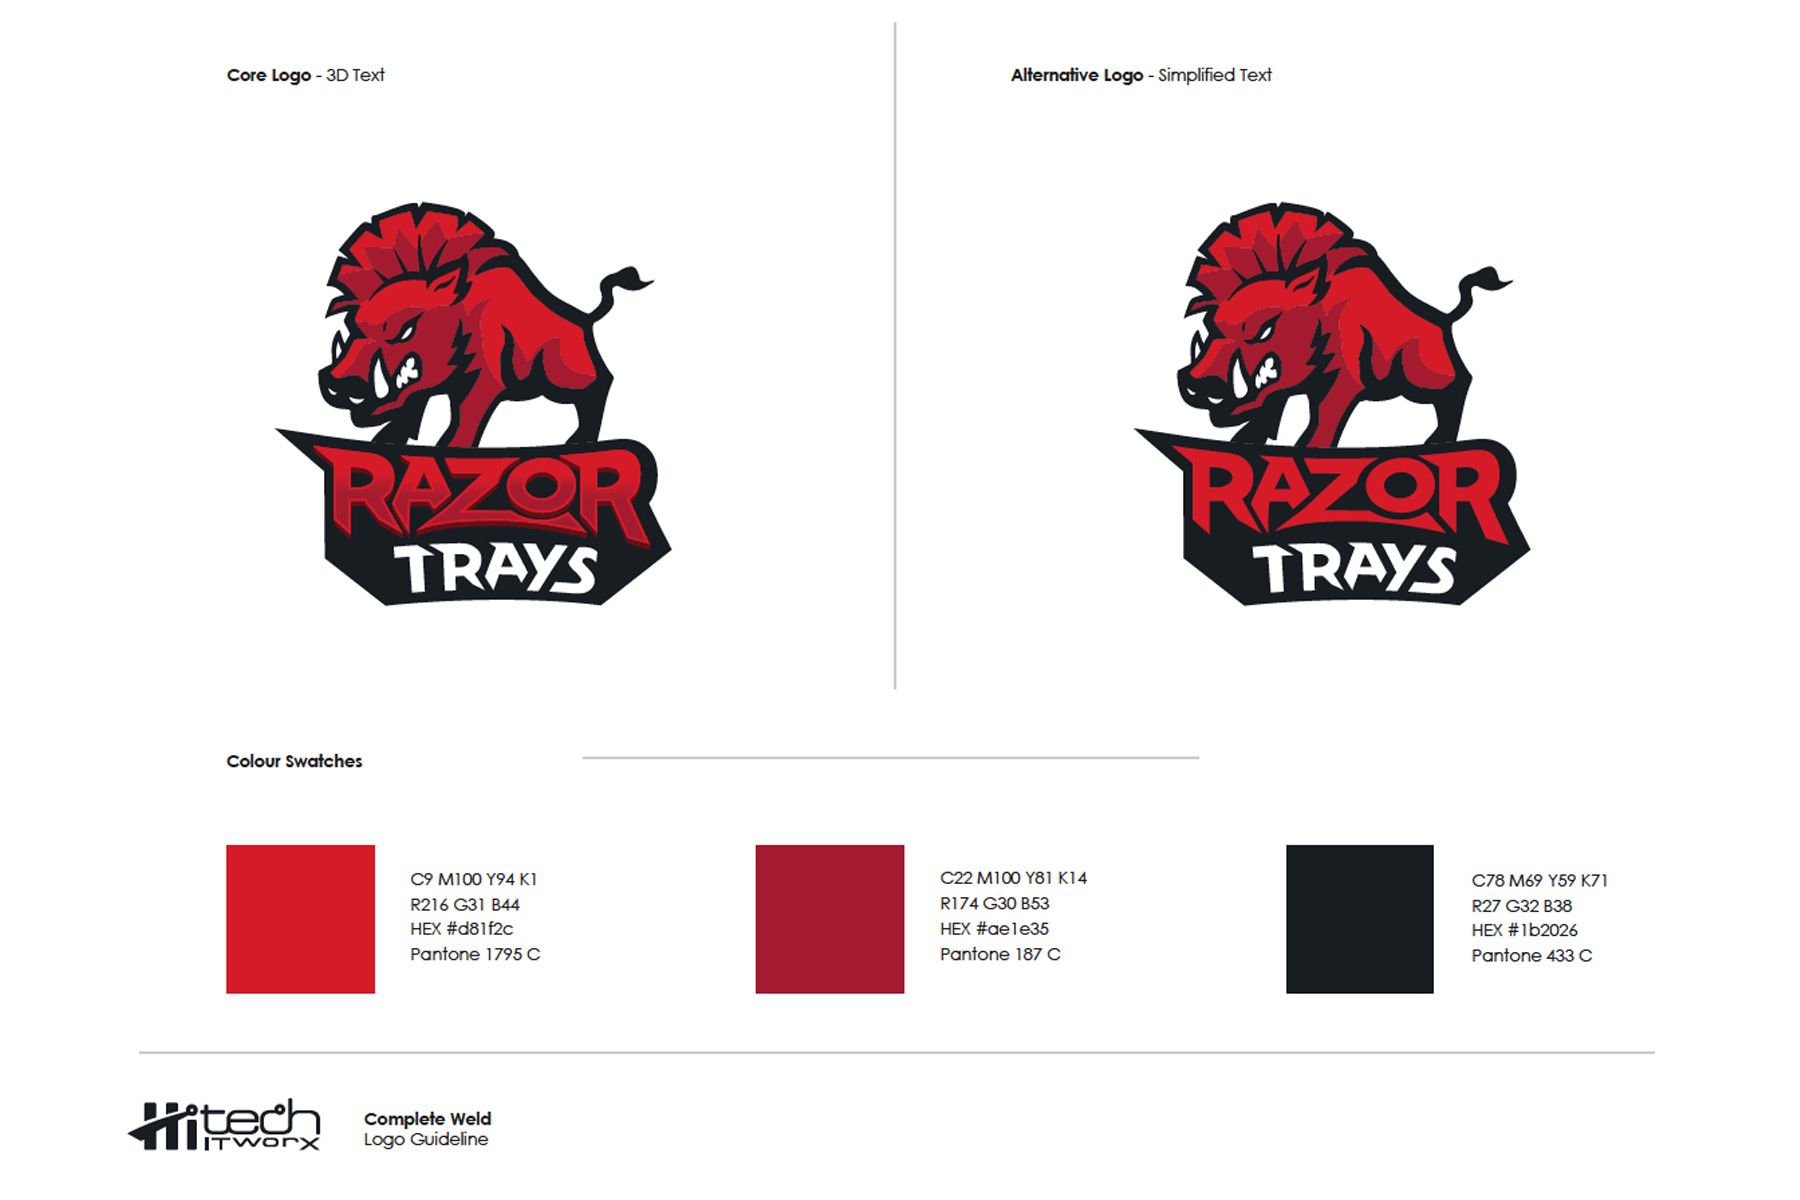 RAZOR Trays logo guidelines